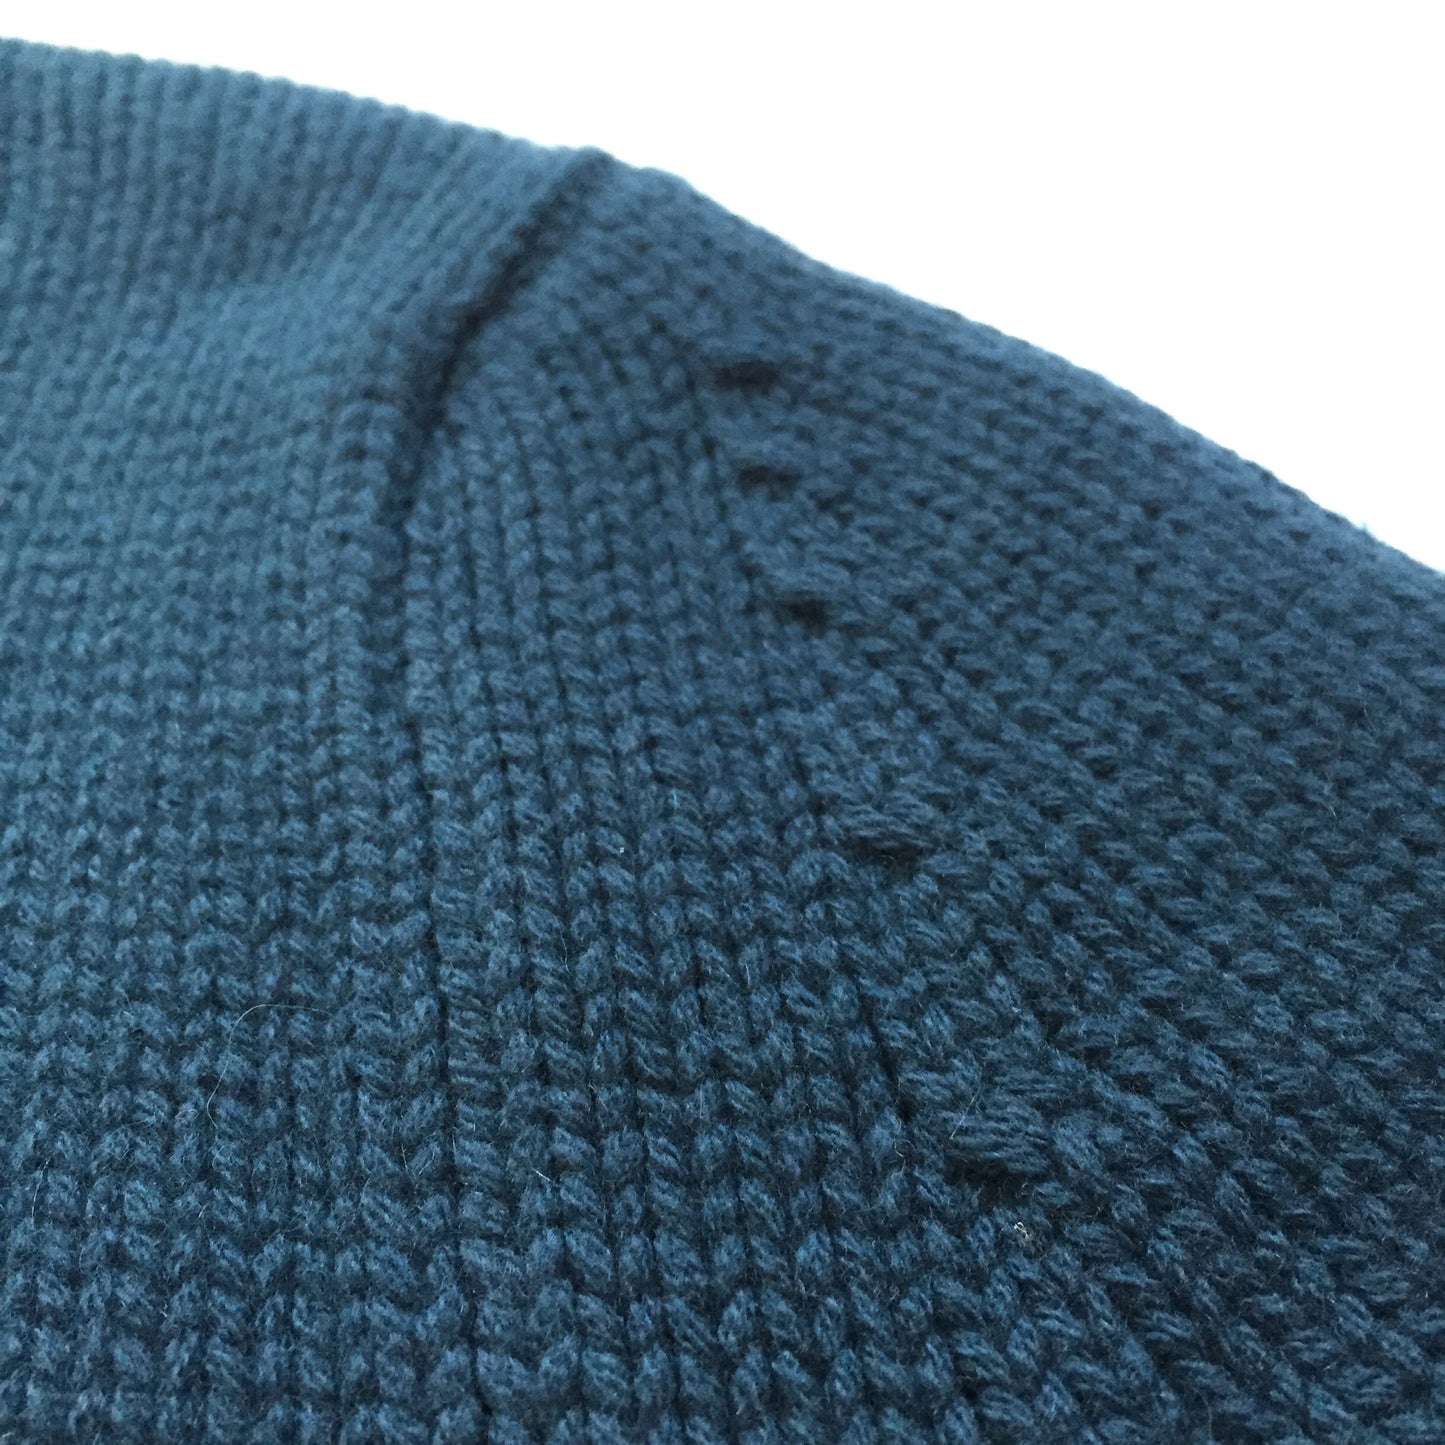 Yang Li - Teal Runway Patch Sweater